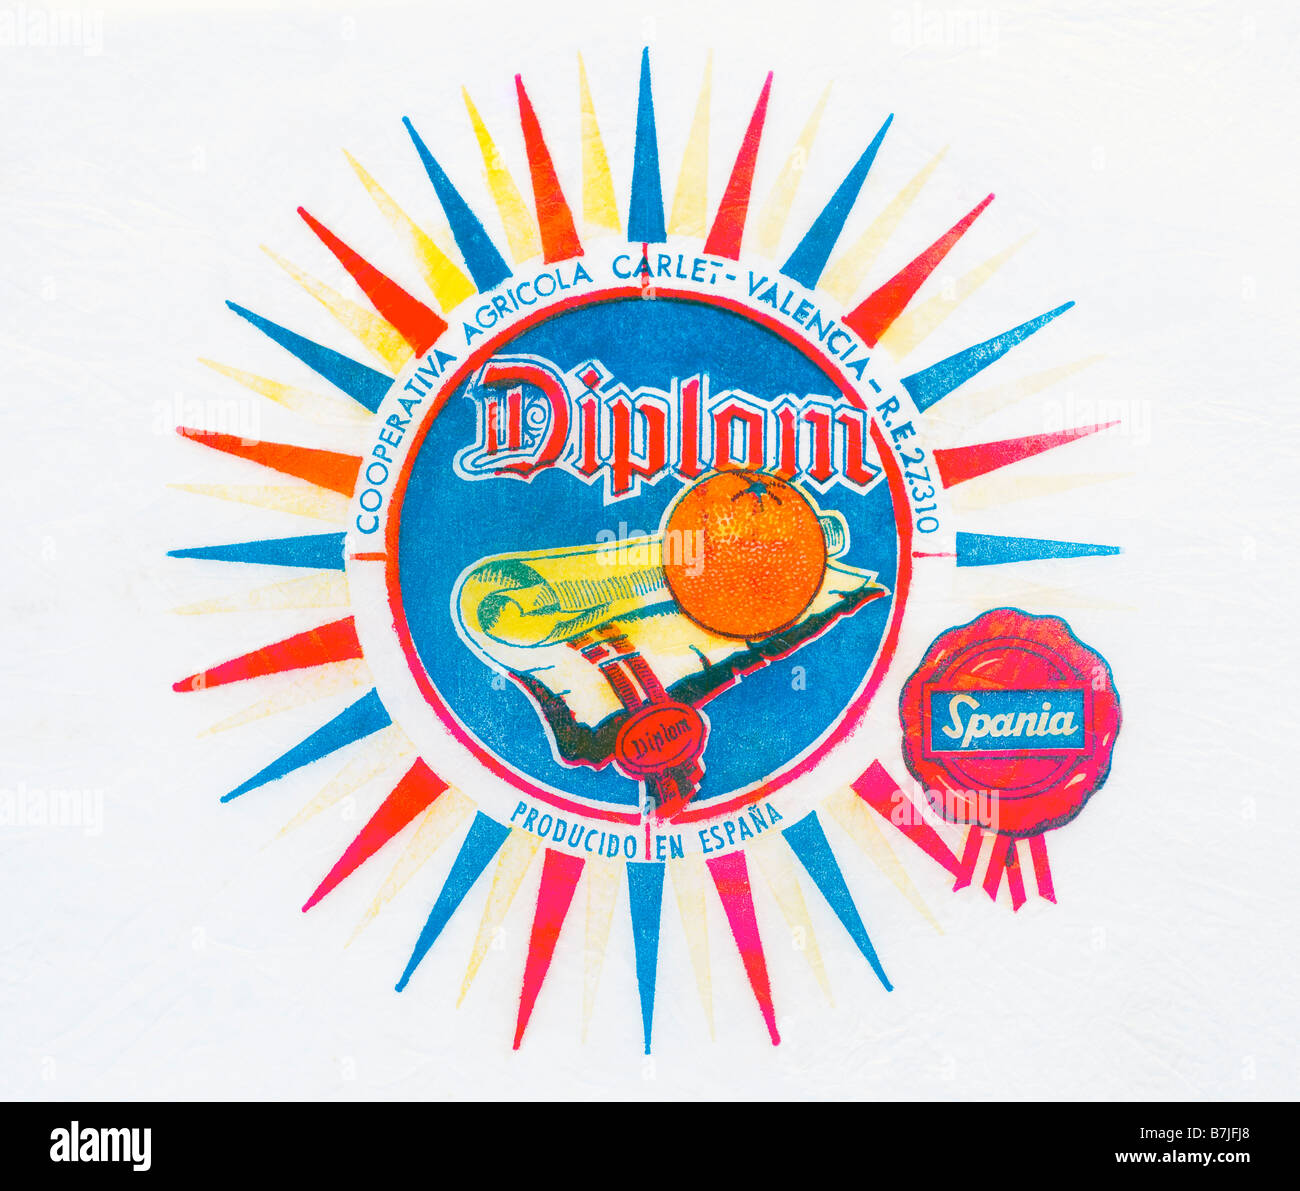 Printed ephemera / Citrus fruit wrapper from Spain - Diploma illustration on tissue paper. Stock Photo